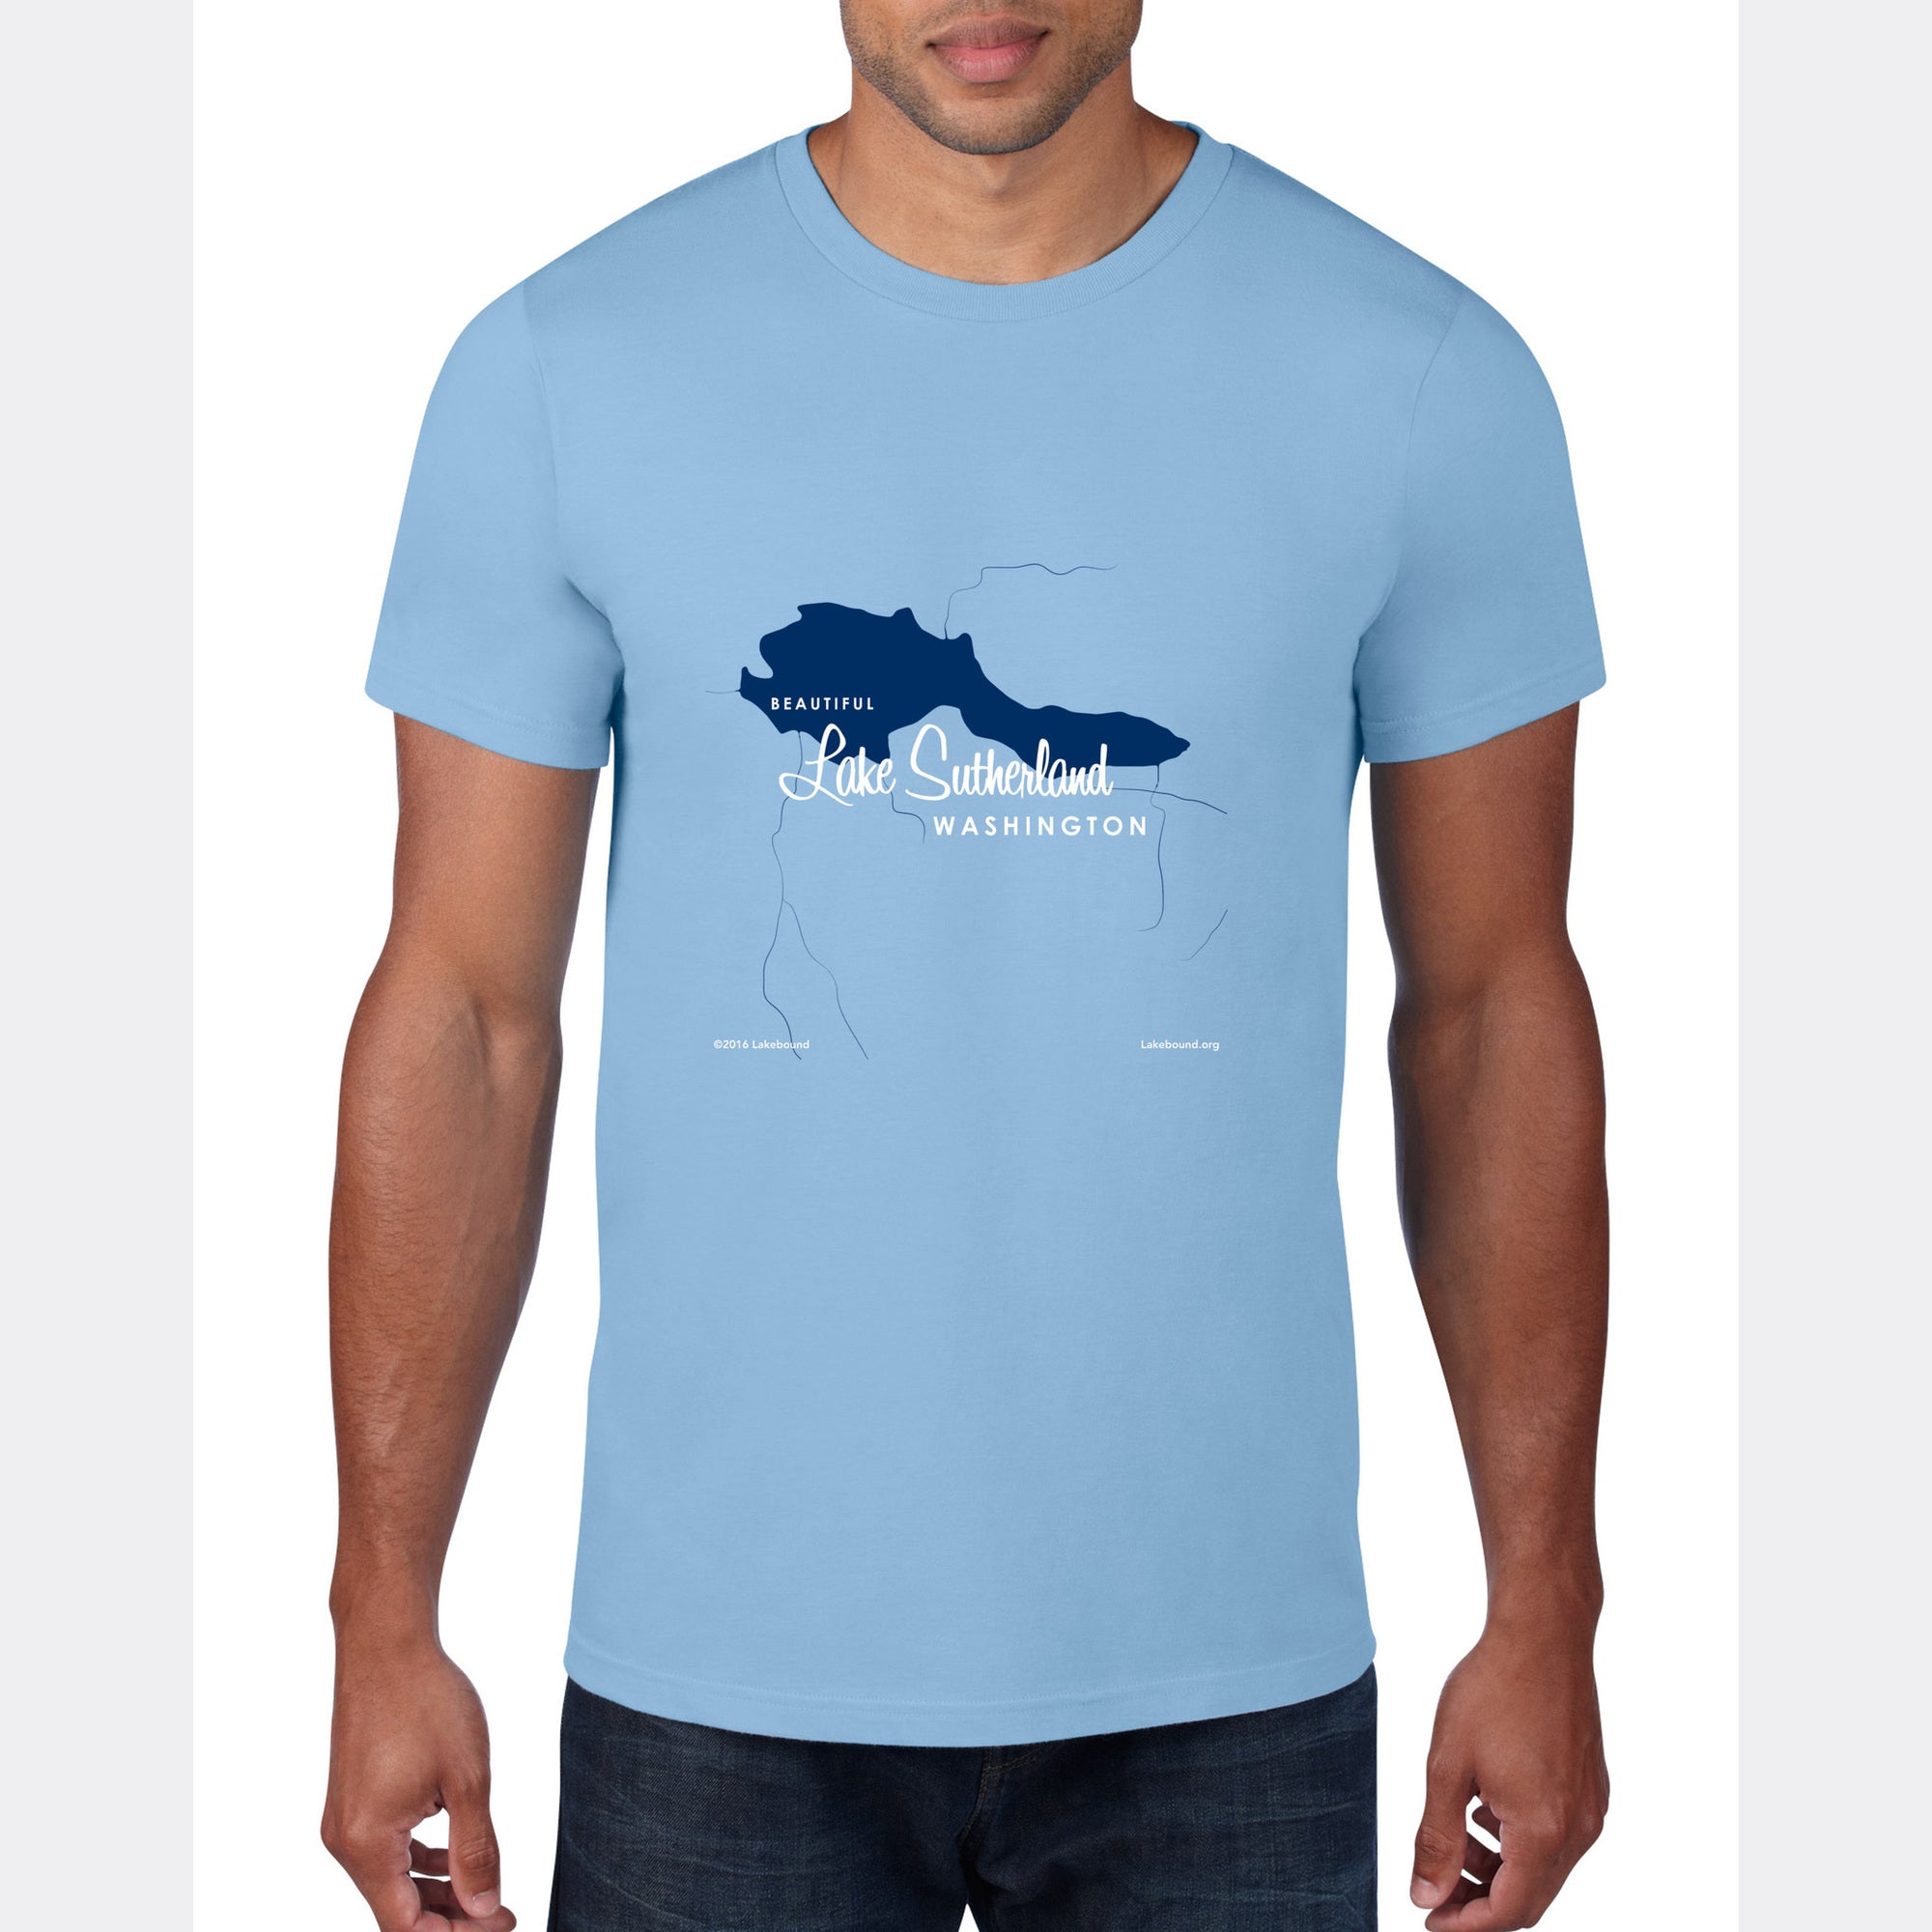 Lake Sutherland Washington, T-Shirt